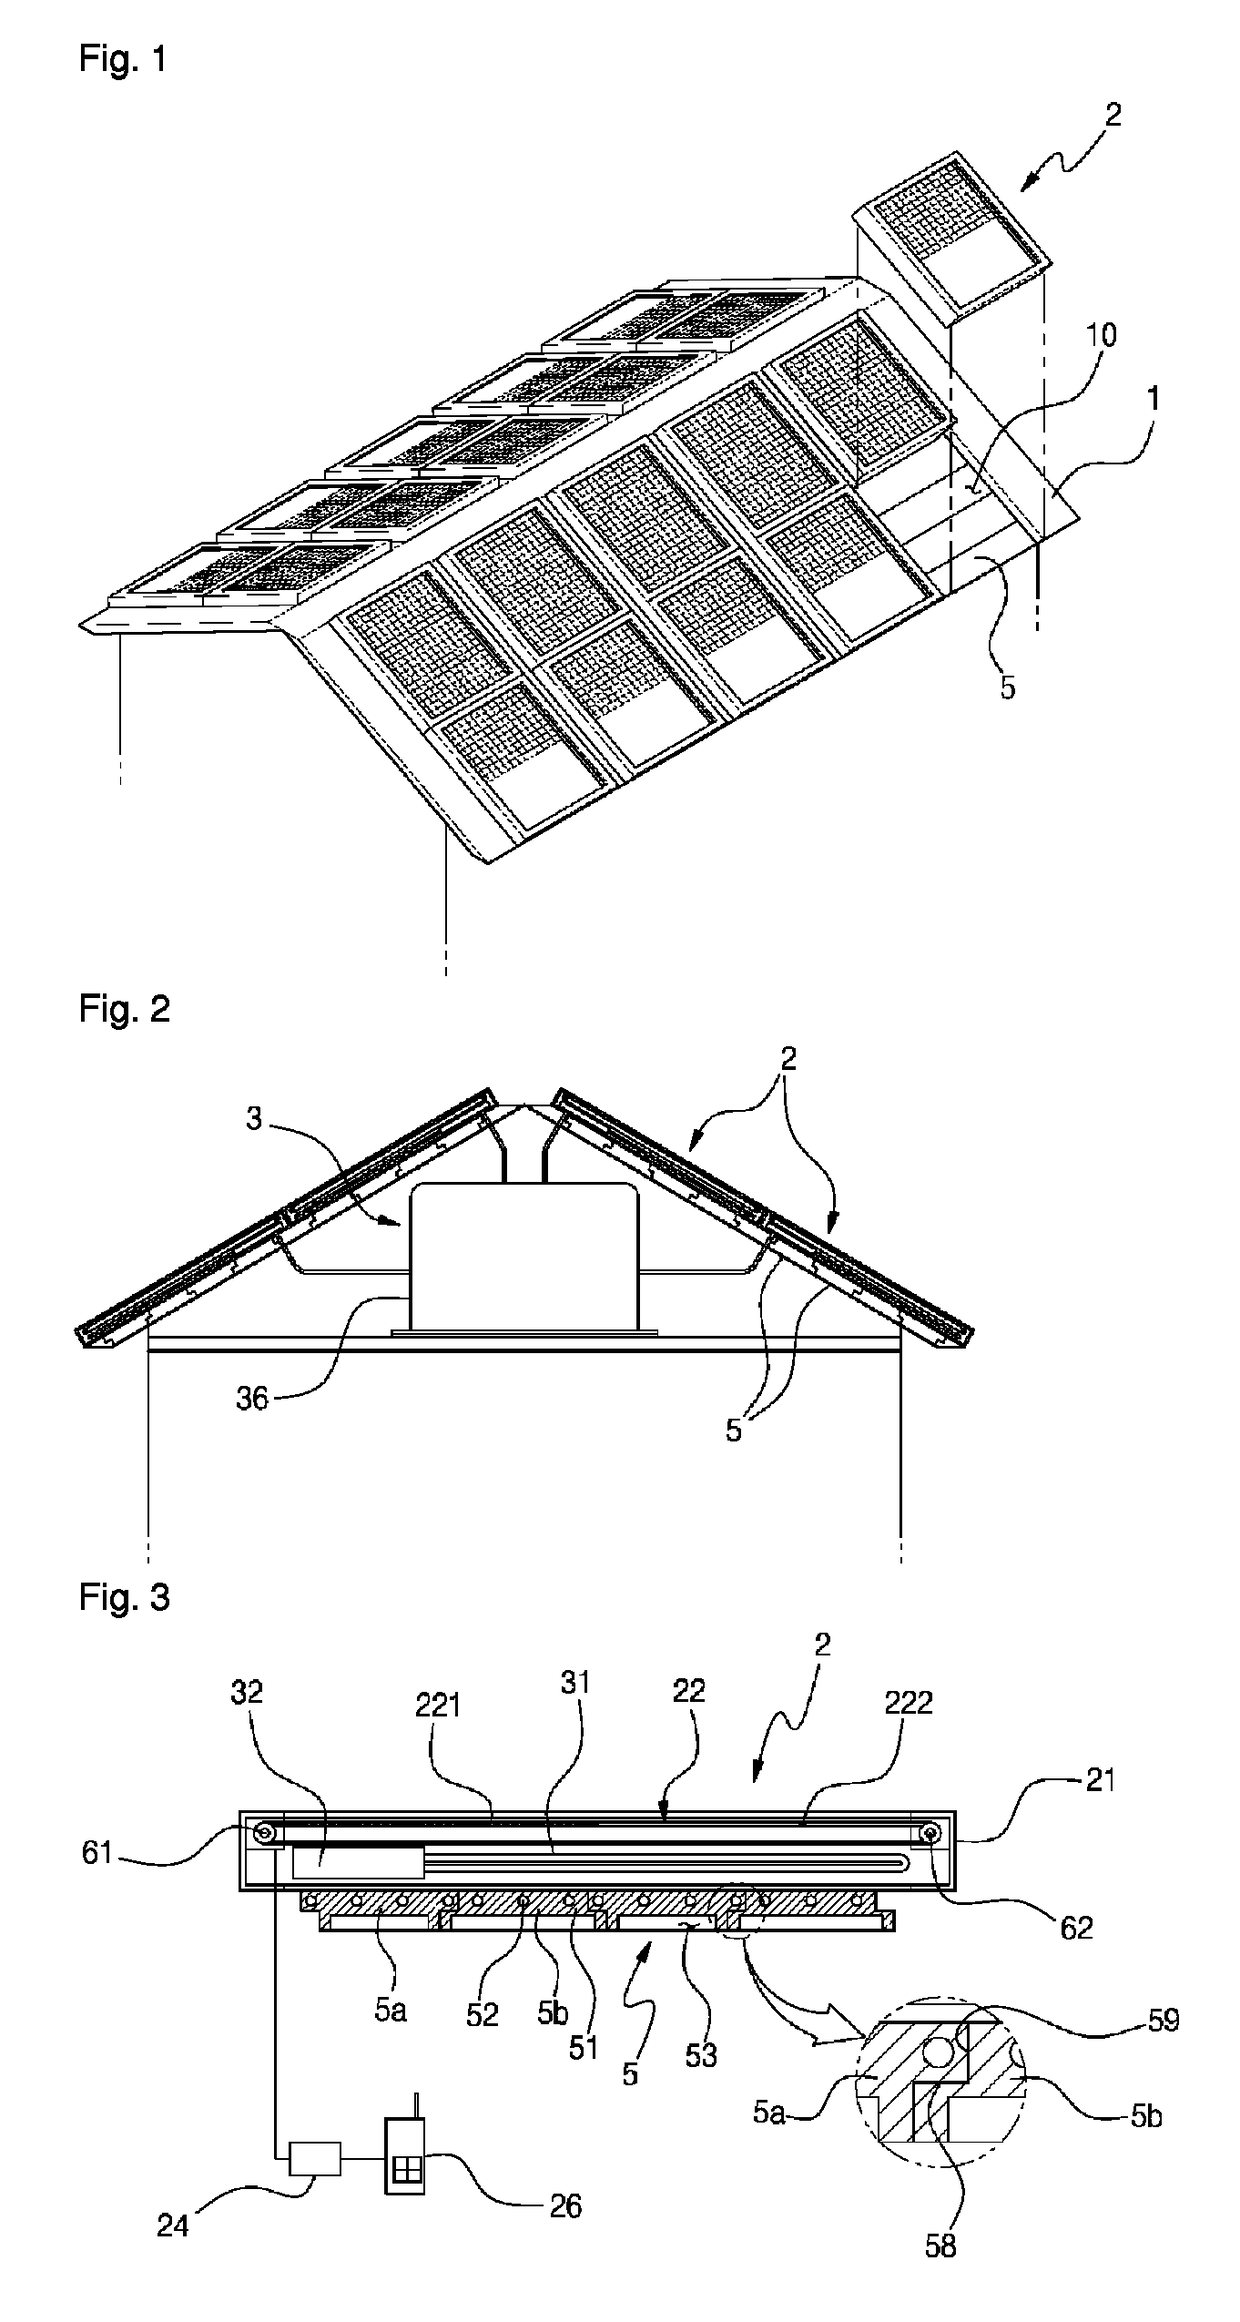 Heating and power generating apparatus using solar energy